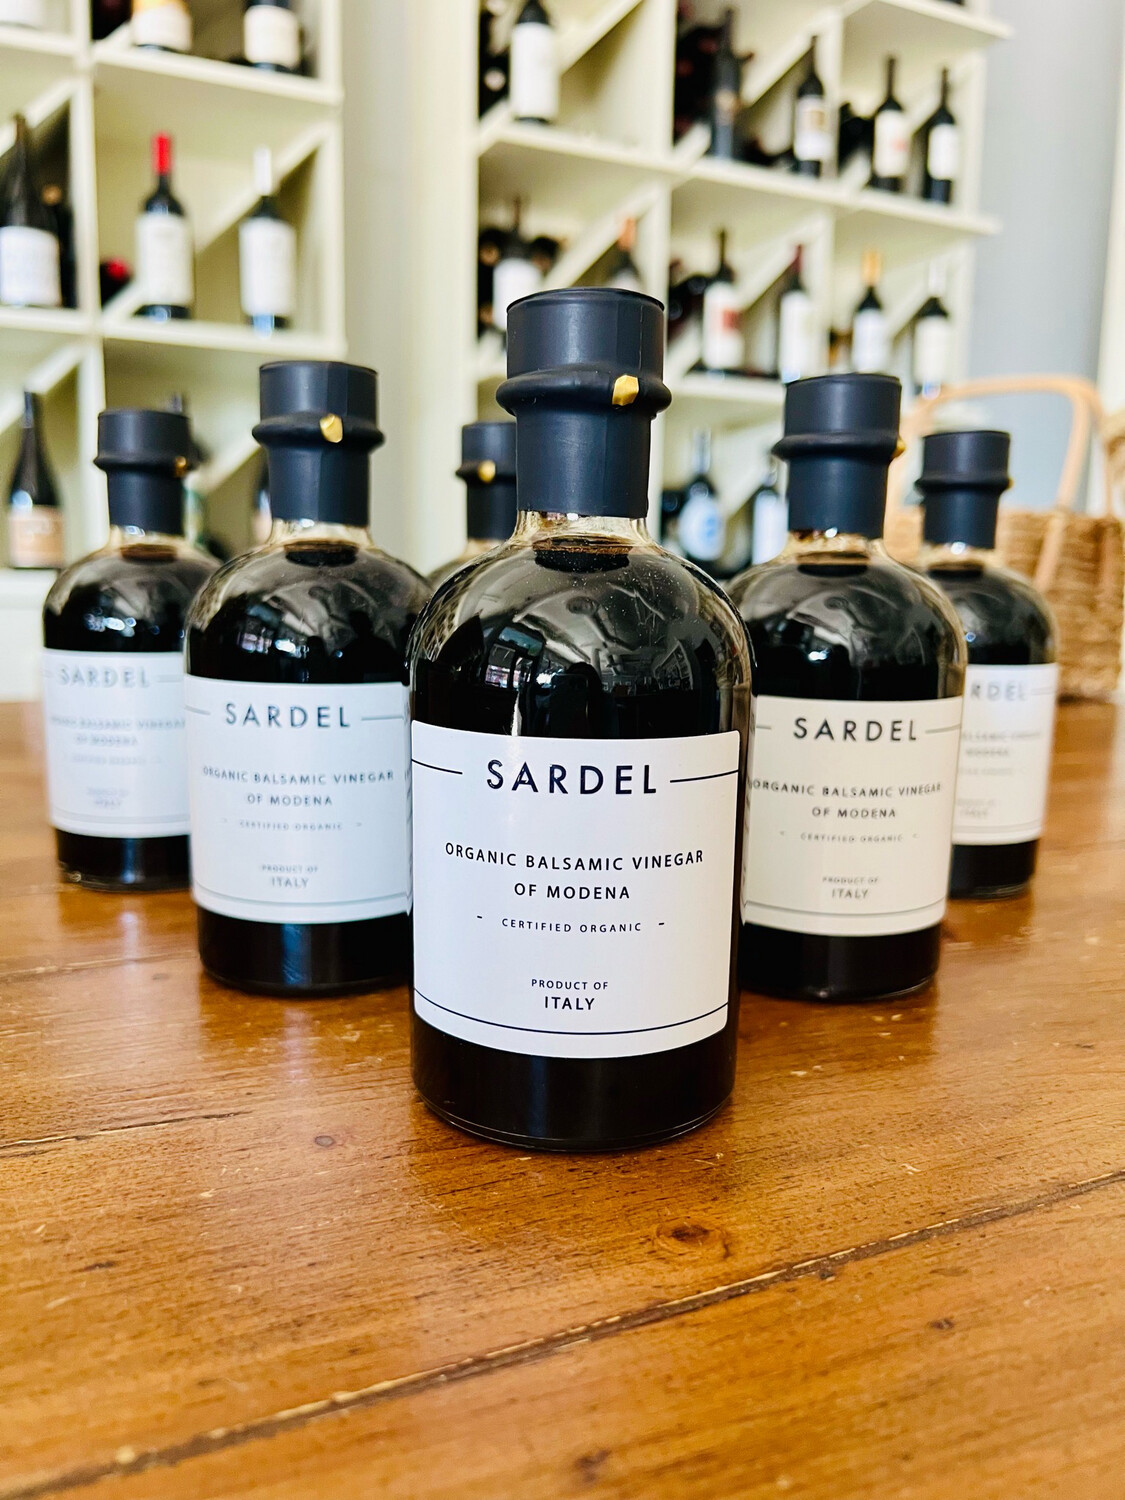 Sardel Organic Balsamic Vinegar, Moderna